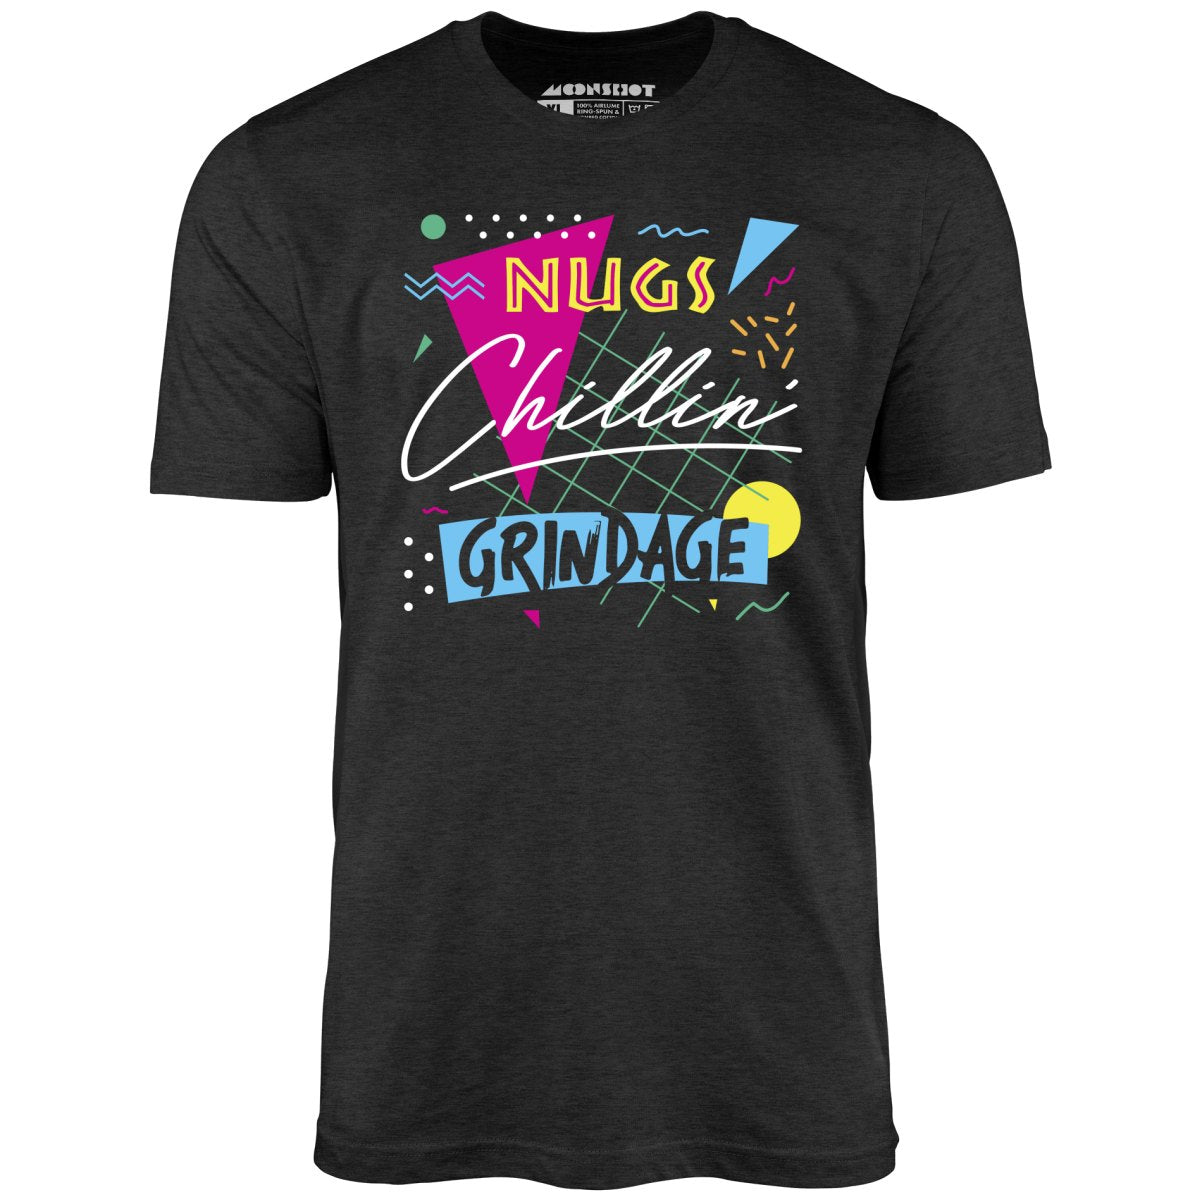 Nugs, Chillin', and Grindage - Unisex T-Shirt